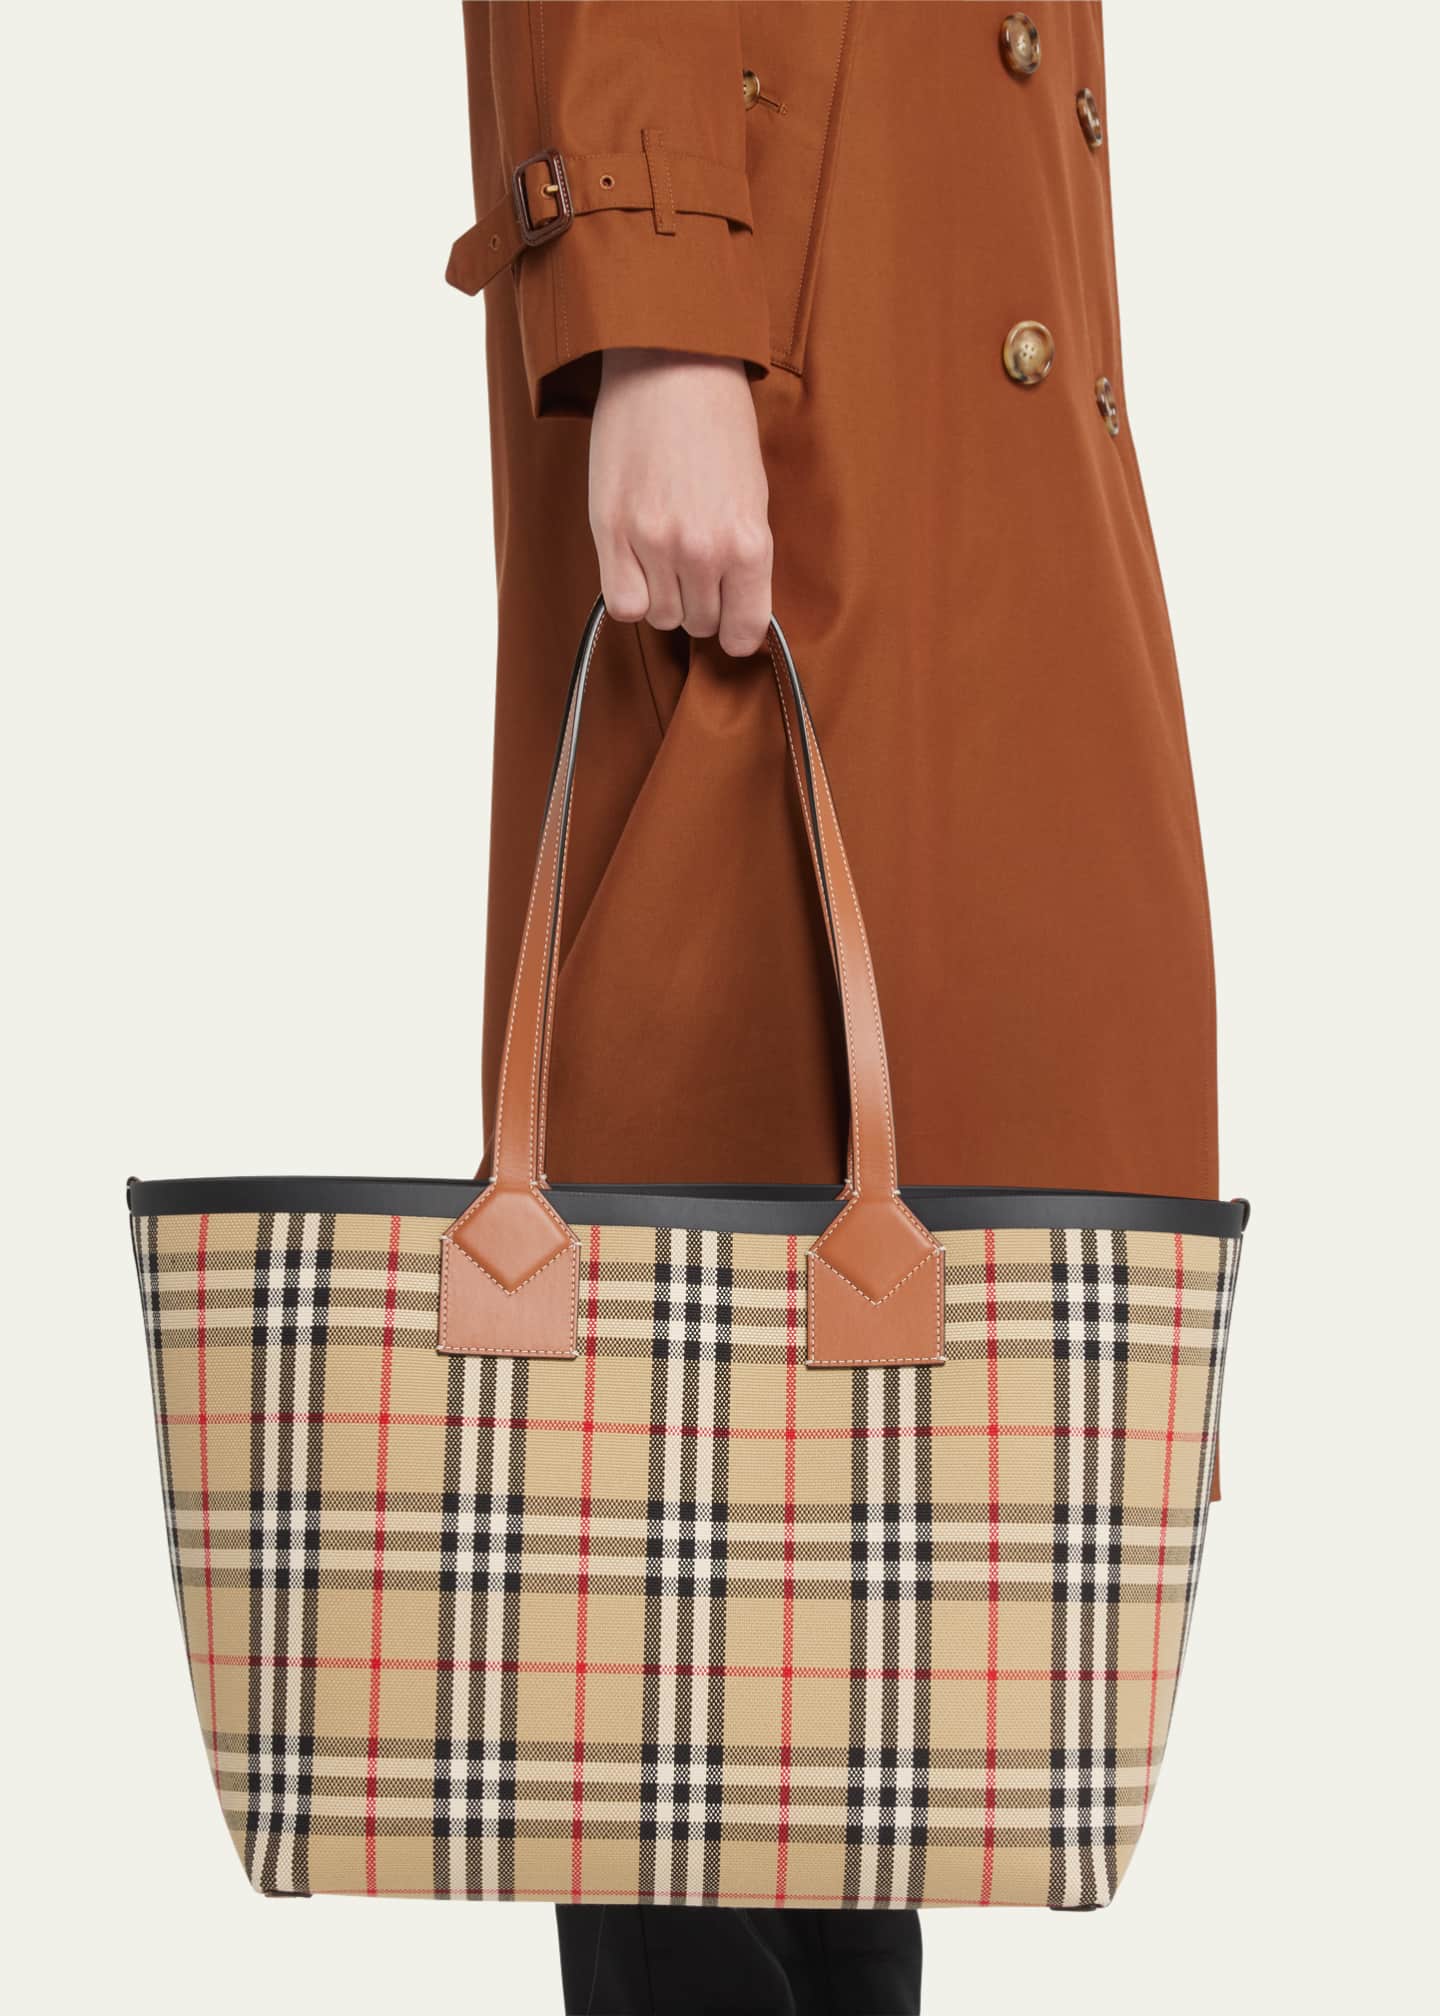 Burberry Medium Check & Leather Tote Bag